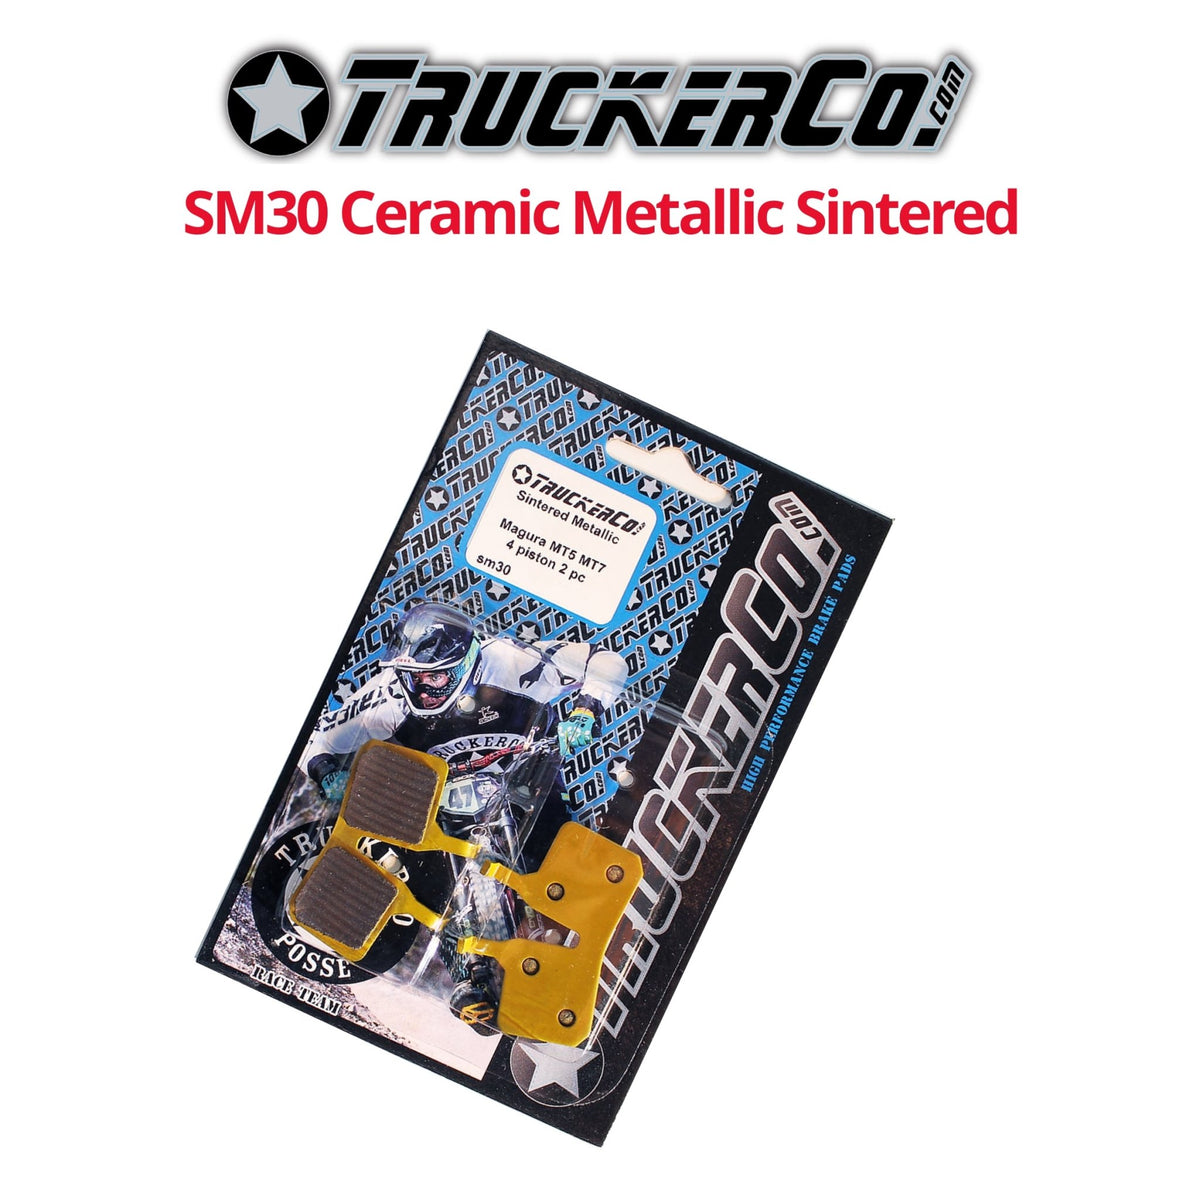 TruckerCo SM30 (Magura 4-piston MT5 MT7) Ceramic Metallic Sintered pads